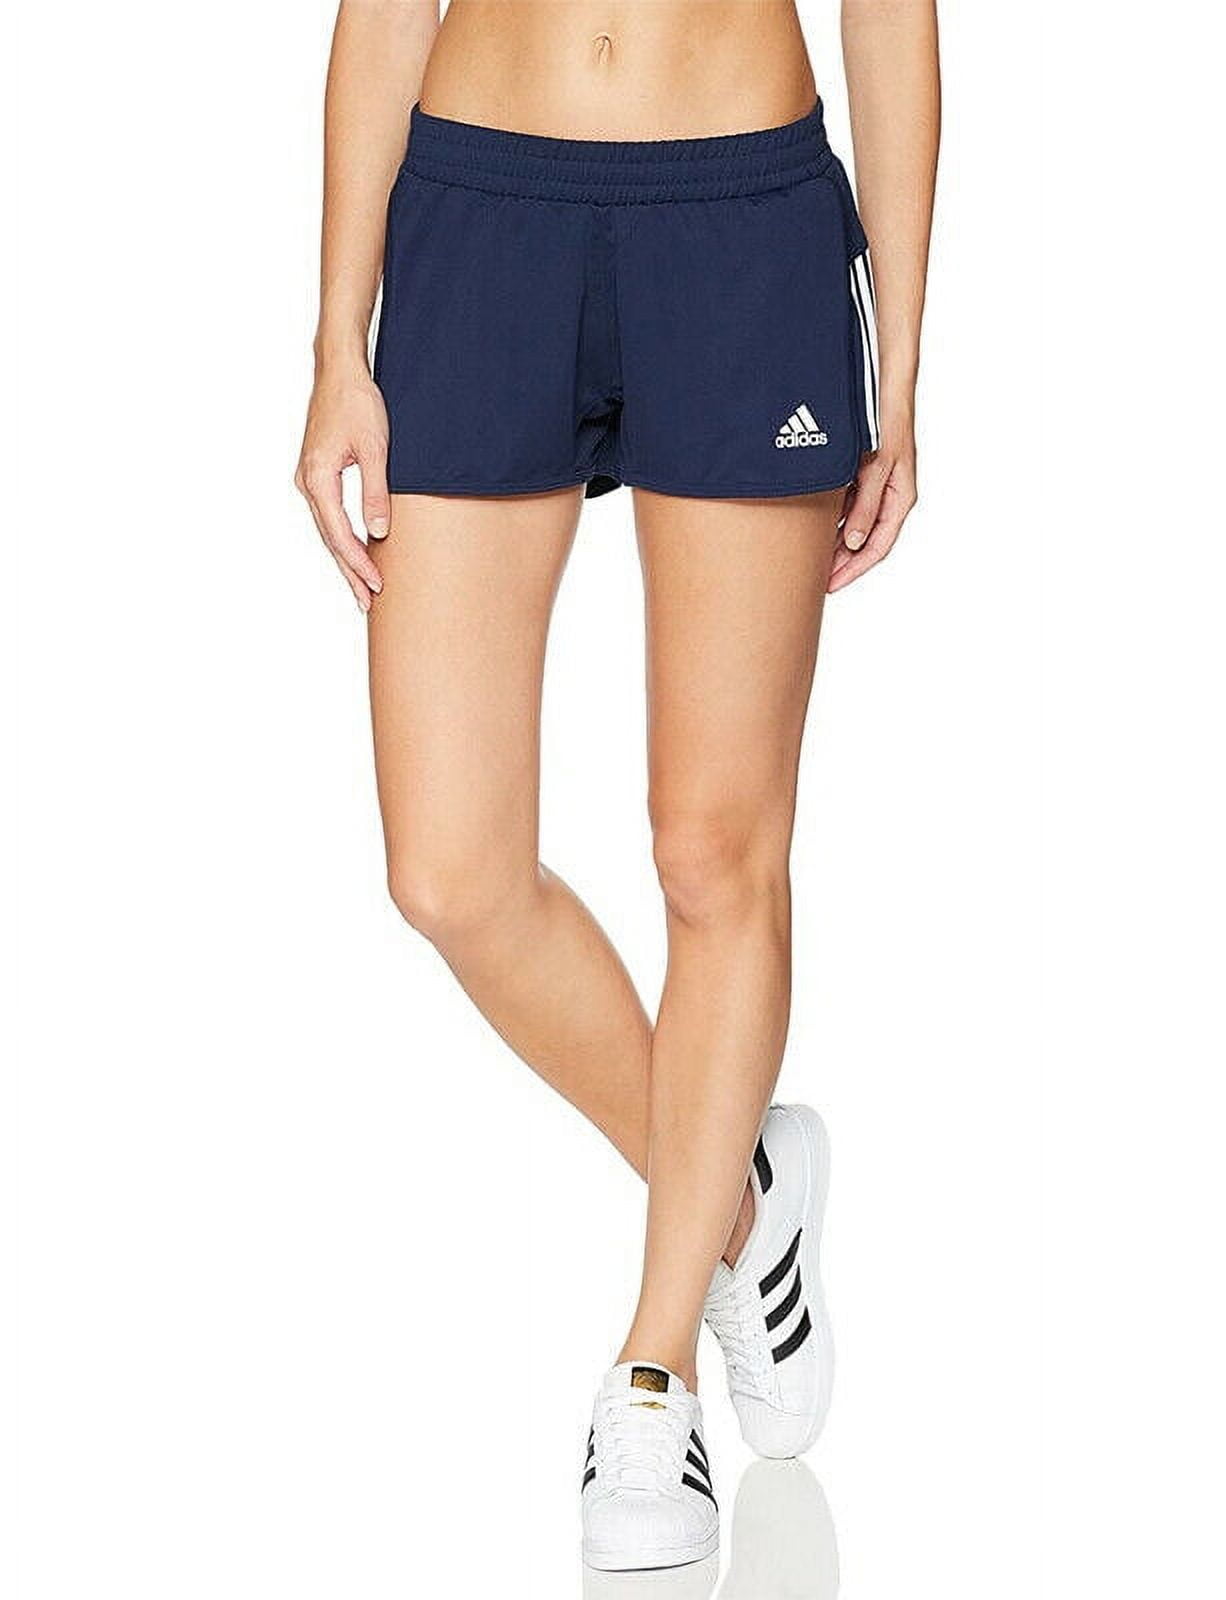 Adidas Women's 3-Stripes Knit Shorts Navy/White CF2817